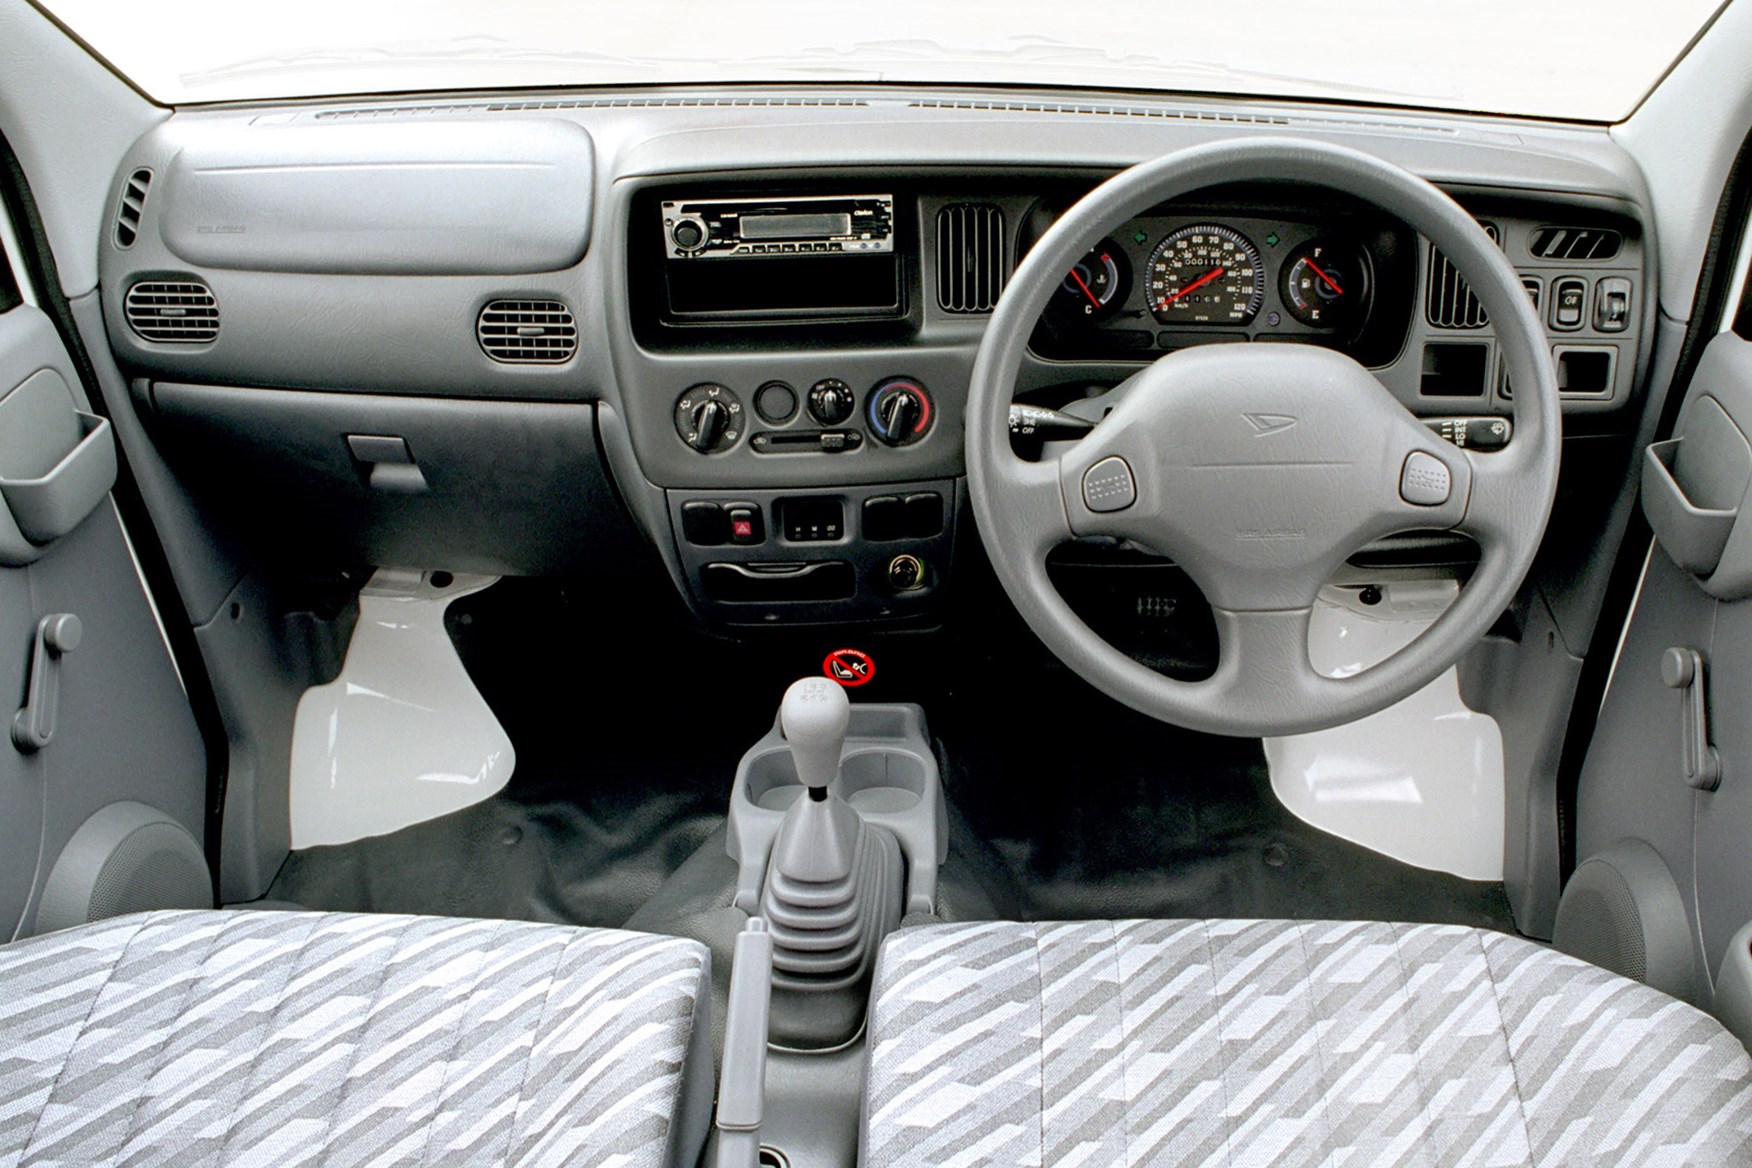 Daihatsu Extol review on Parkers Vans - interior